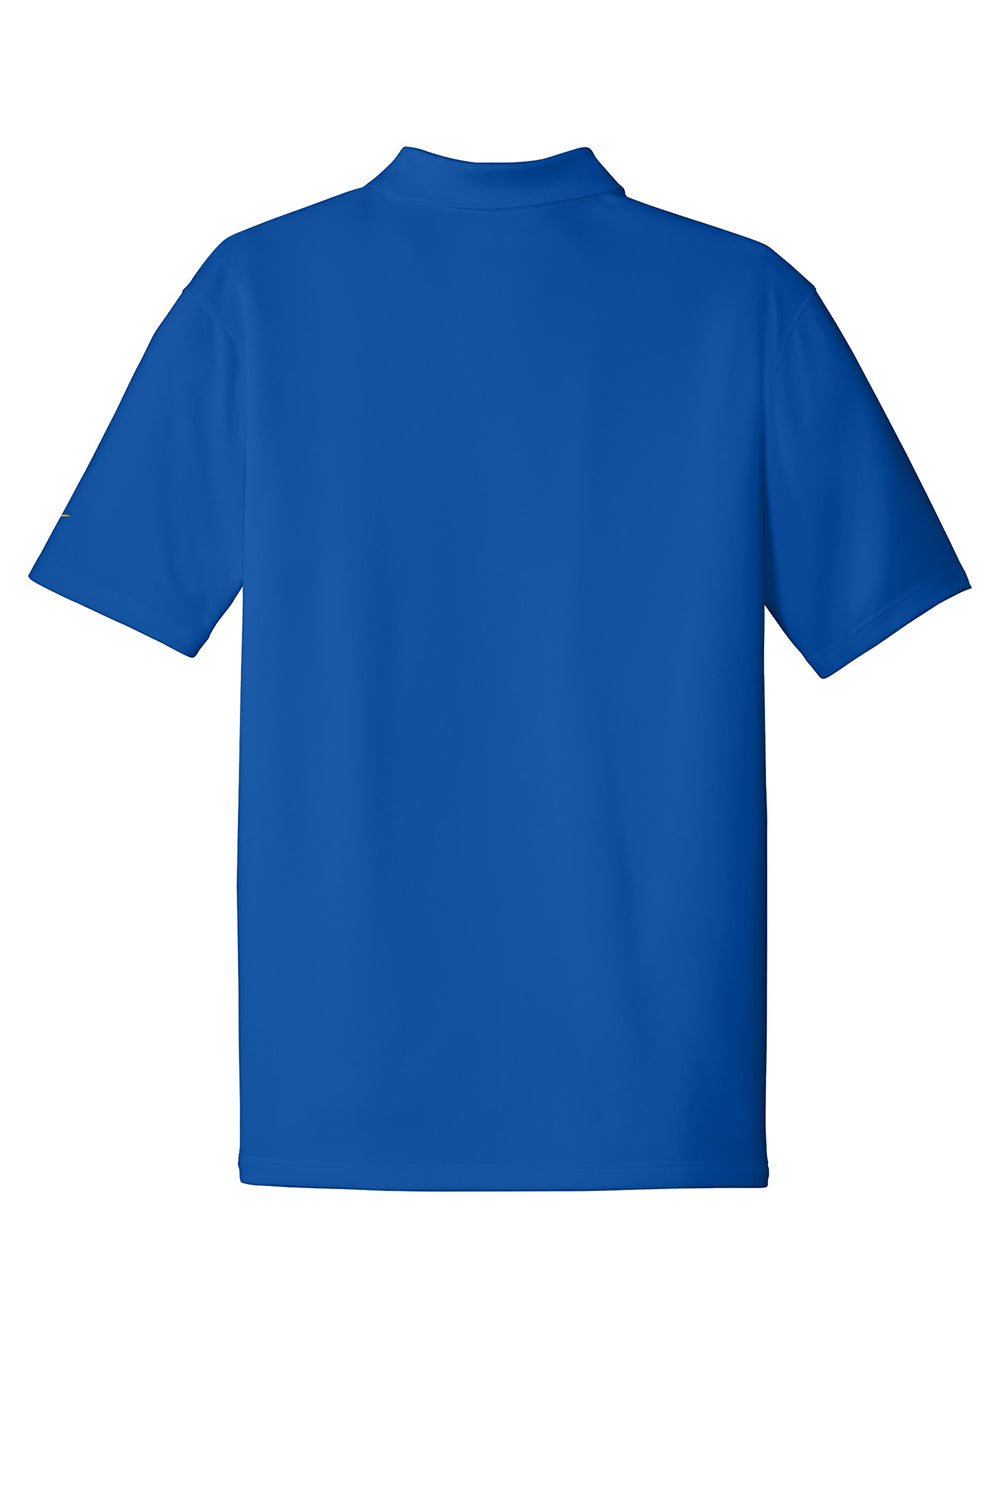 Nike 838956 Mens Players Dri-Fit Moisture Wicking Short Sleeve Polo Shirt Gym Blue Flat Back